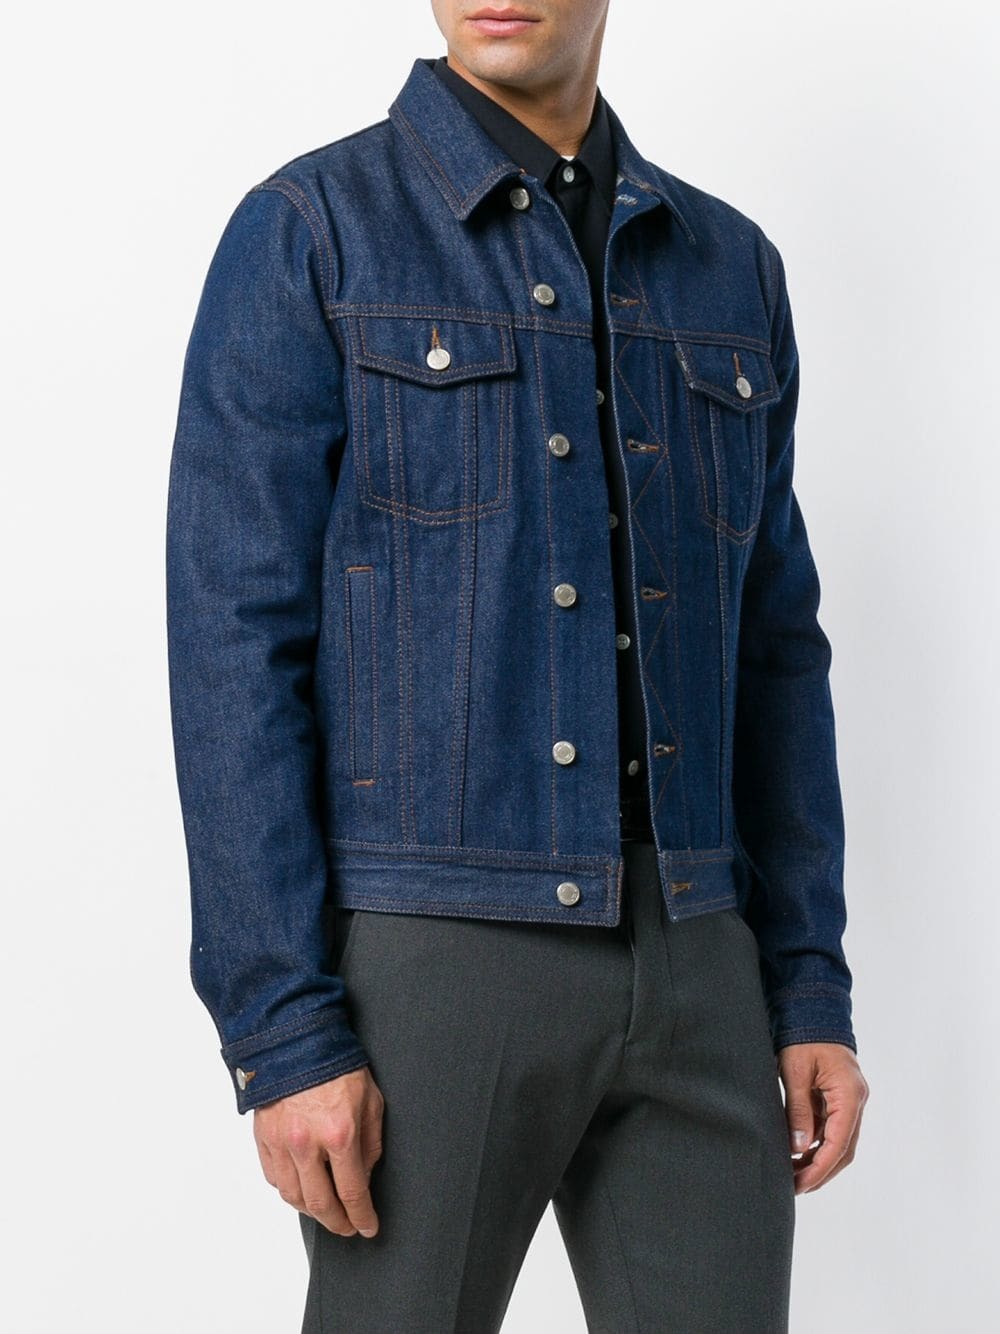 AMI Alexandre Mattiussi Denim Jacket With Ami Paris Patch, $218 